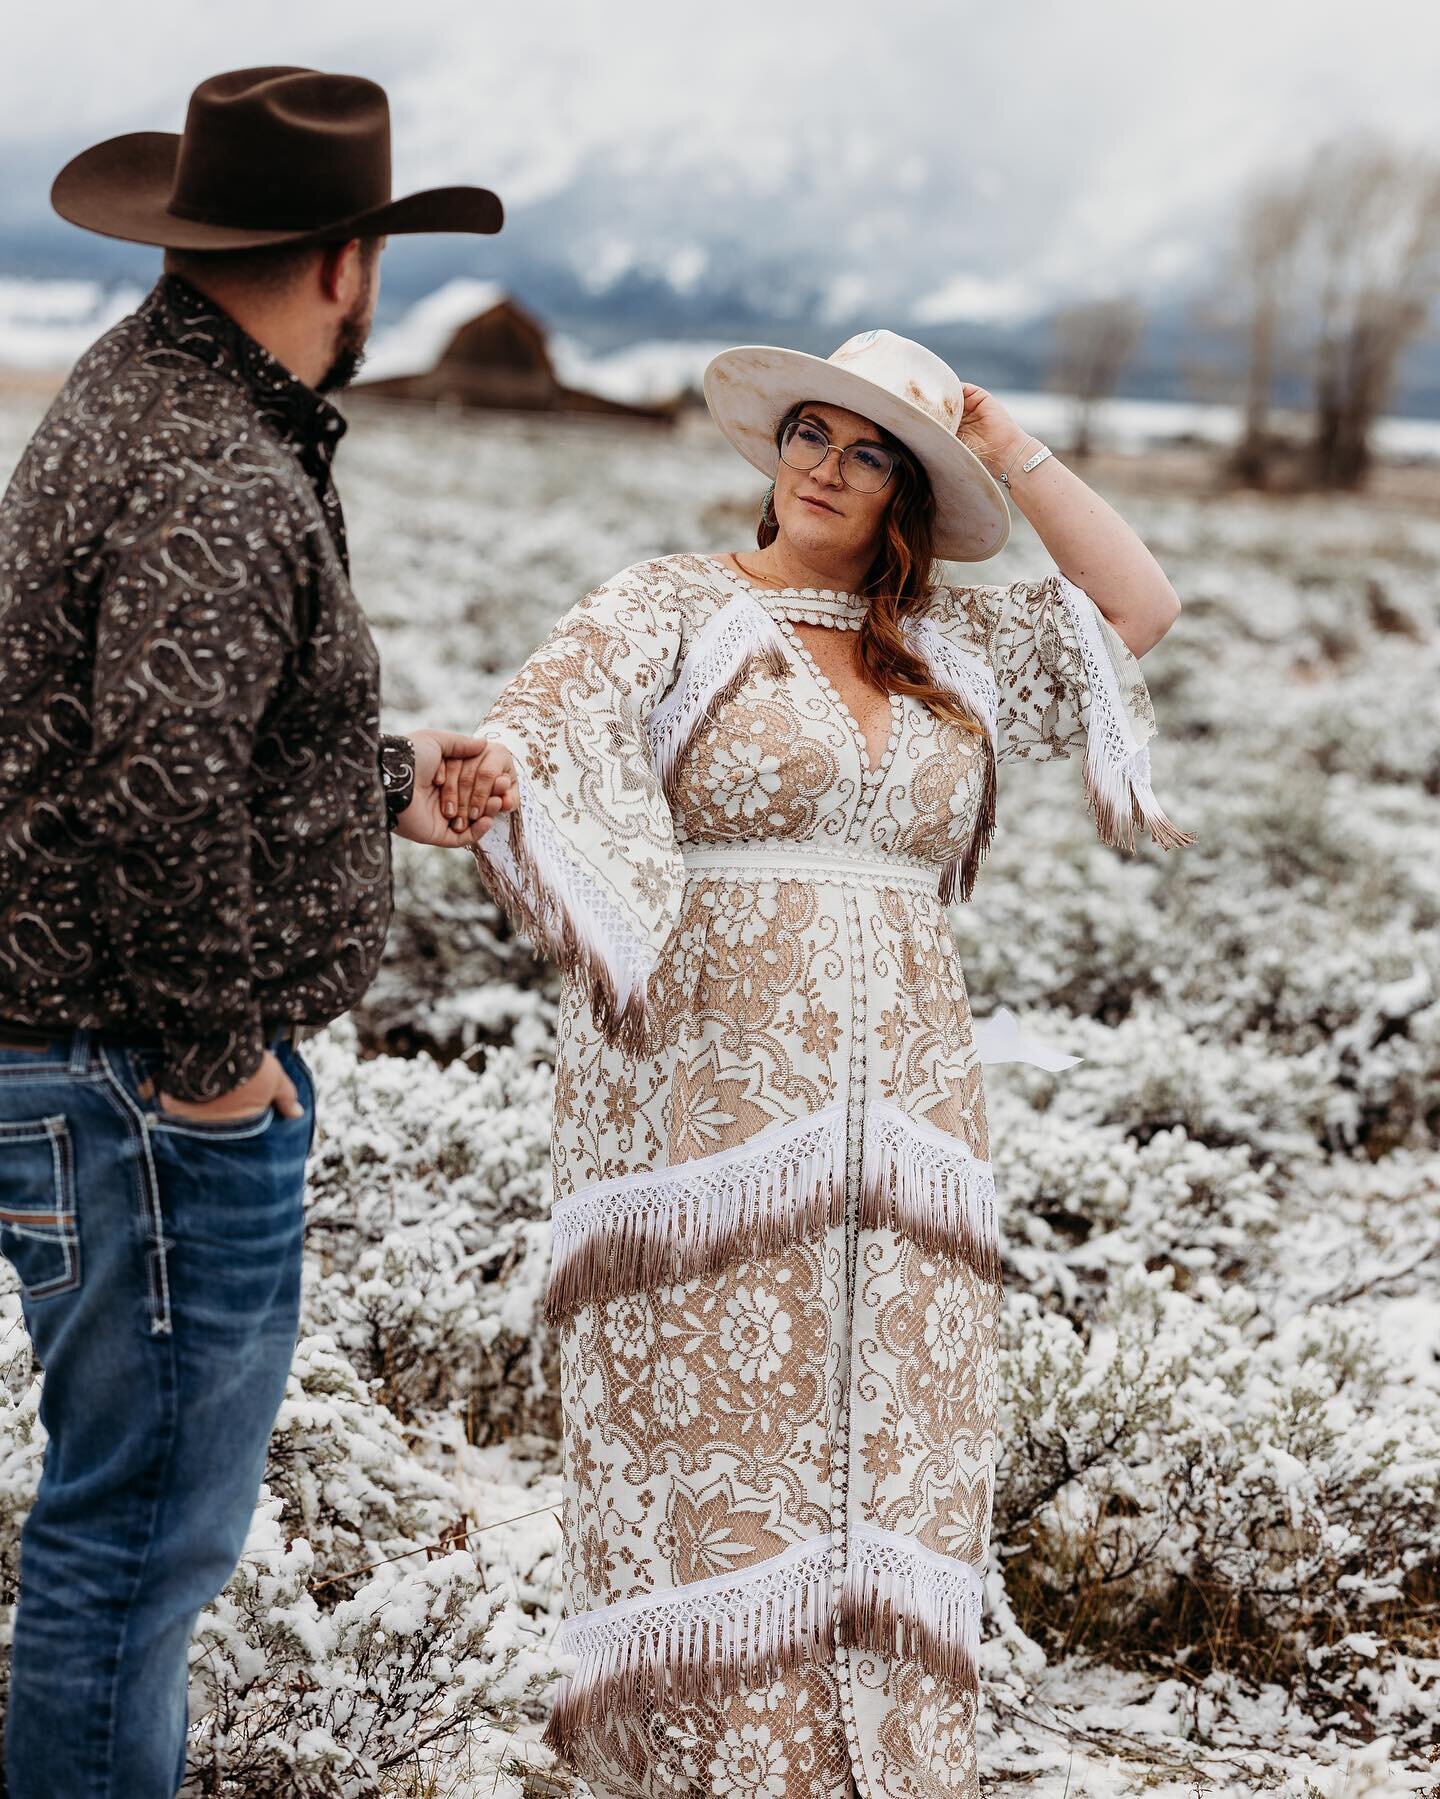 Love the #yellowstone vibes of this elopement! 🏔️ Congrats Meghann!
.
.
.
#bohoweddingdress #elopment #westernwedding #westernweddingmagazine #adventurewedding #yellowstone #winterwedding #justengaged💍